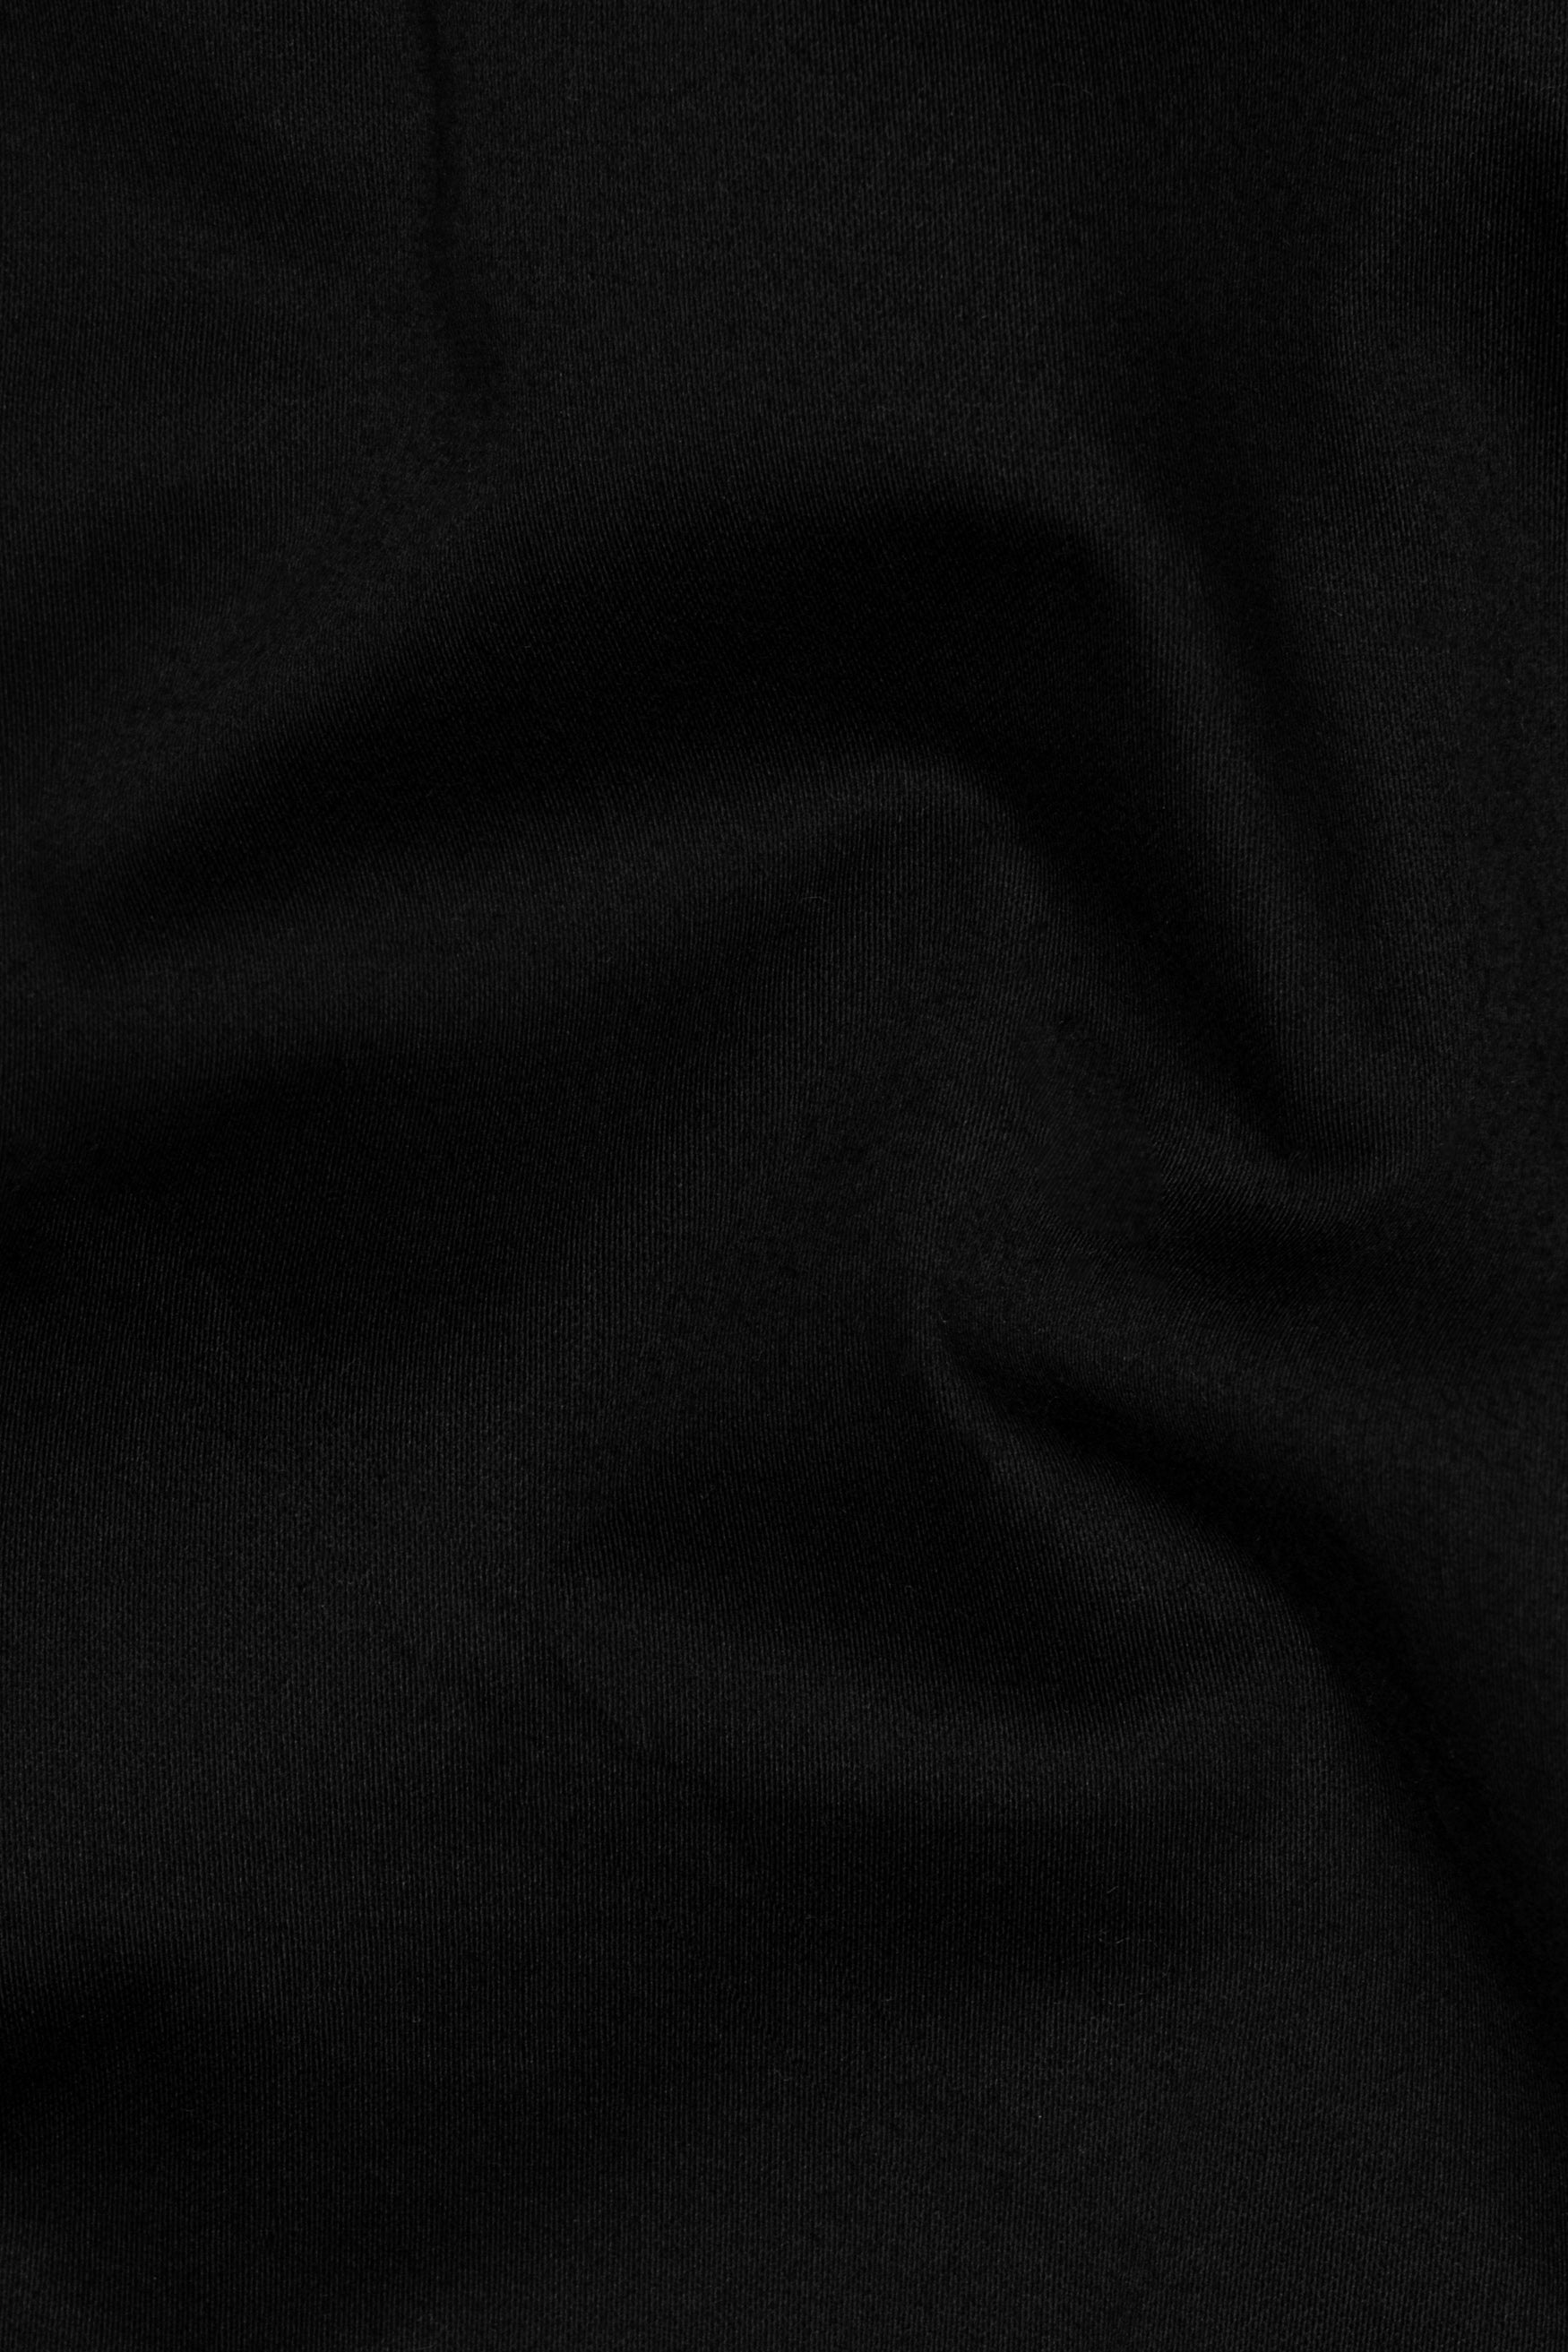 Jade Black French Crown Acronym Patchwork Premium Cotton Bomber Jacket